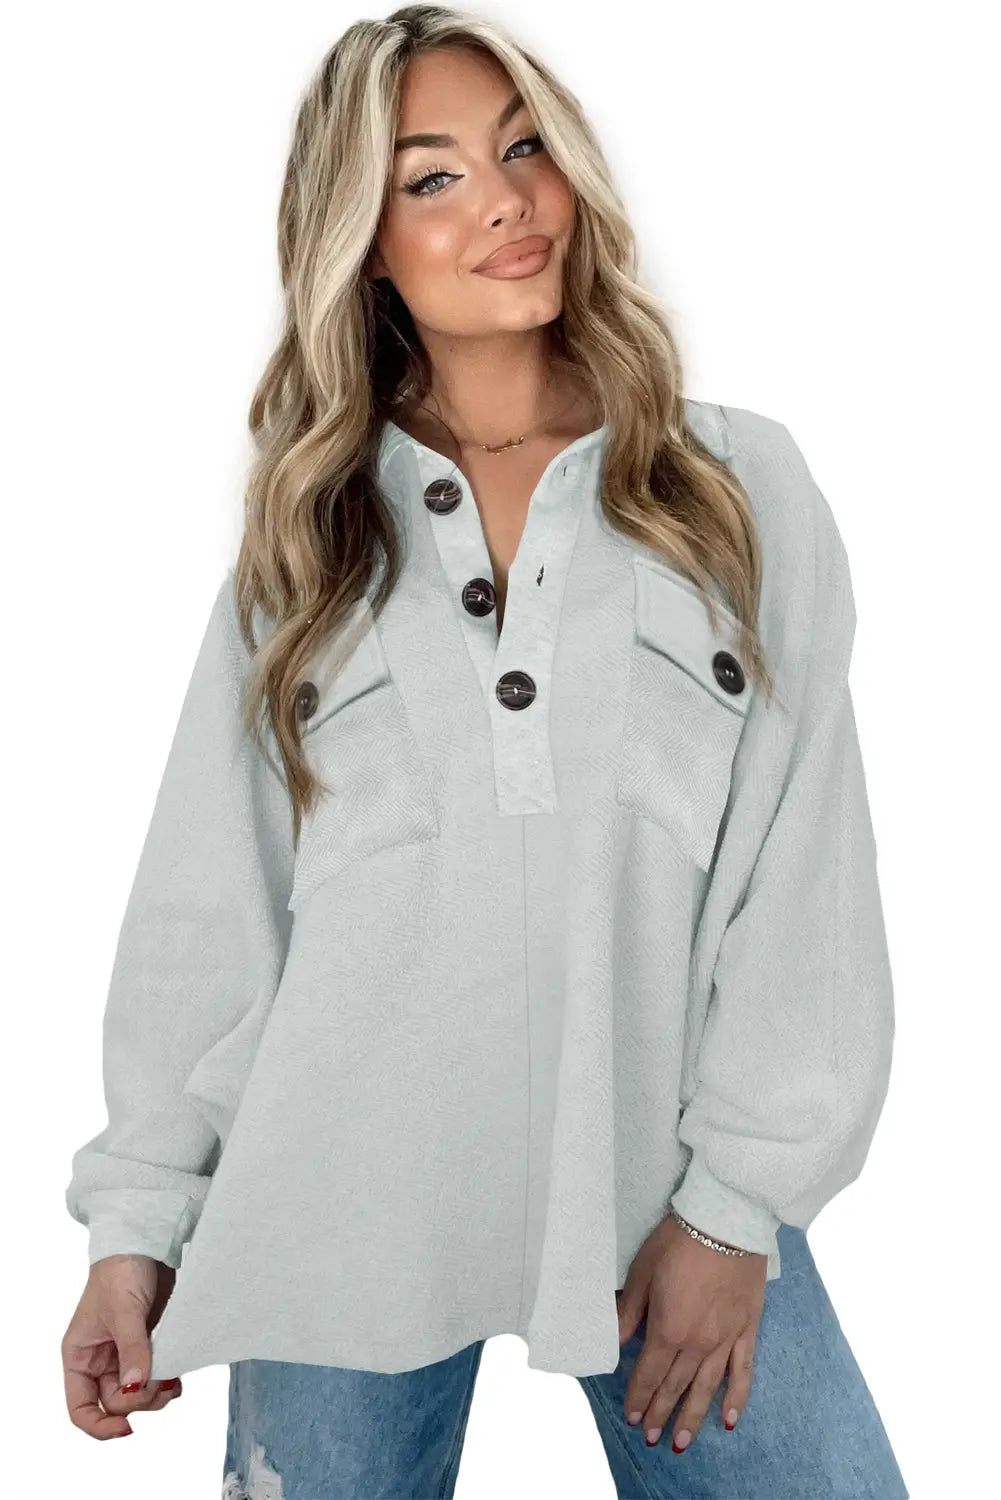 White oversized flap pockets button collared sweatshirt - sweatshirts & hoodies